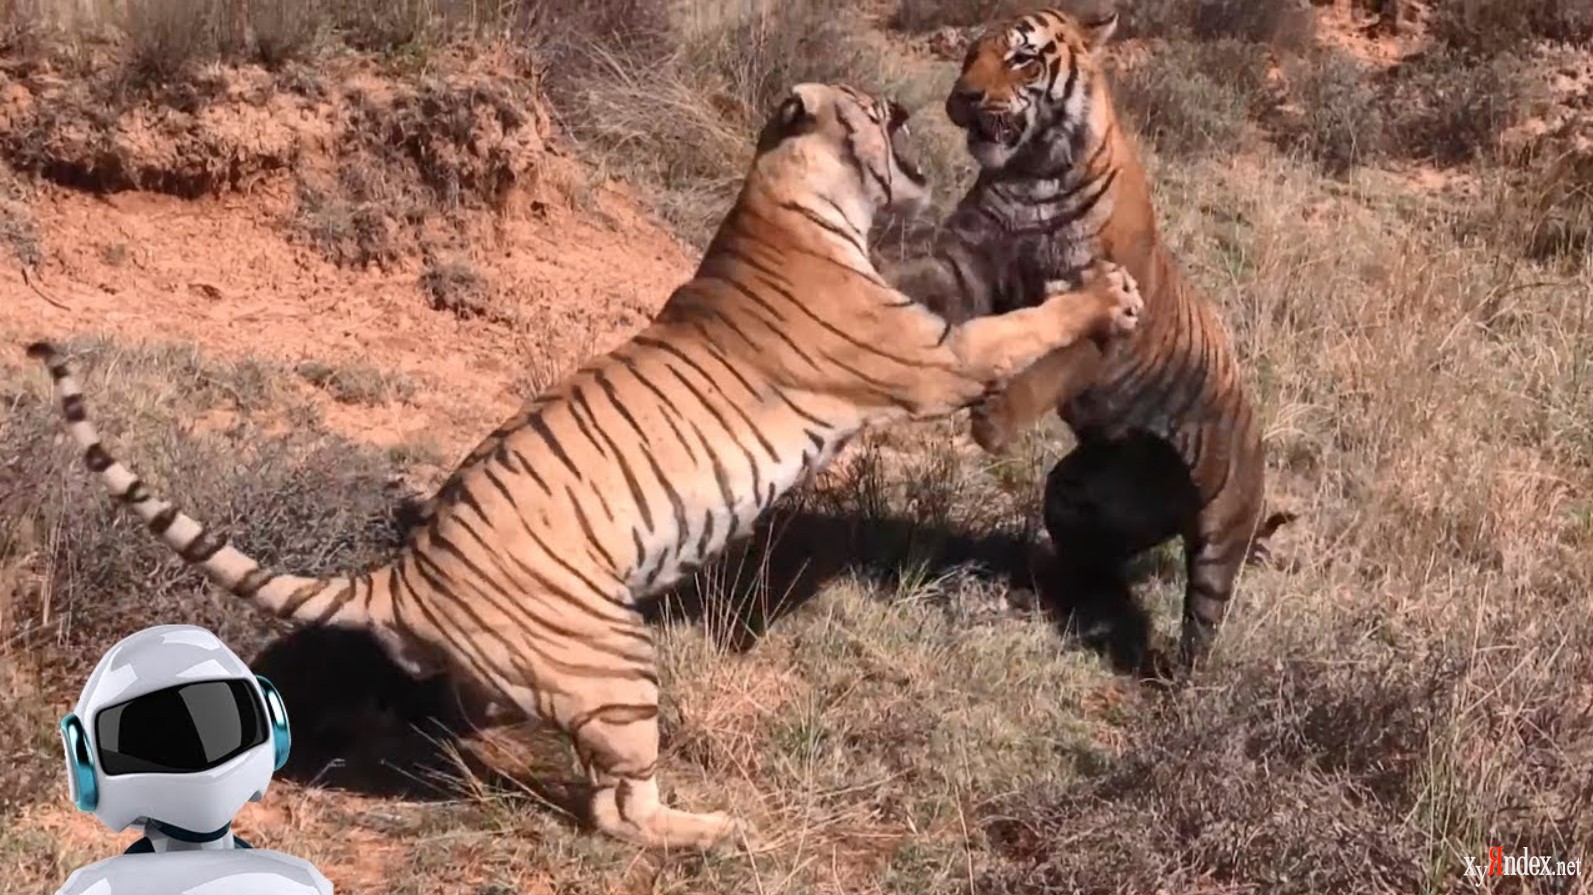 Битва животных в природе видео. Лев против тигра. Драки животных в дикой природе.